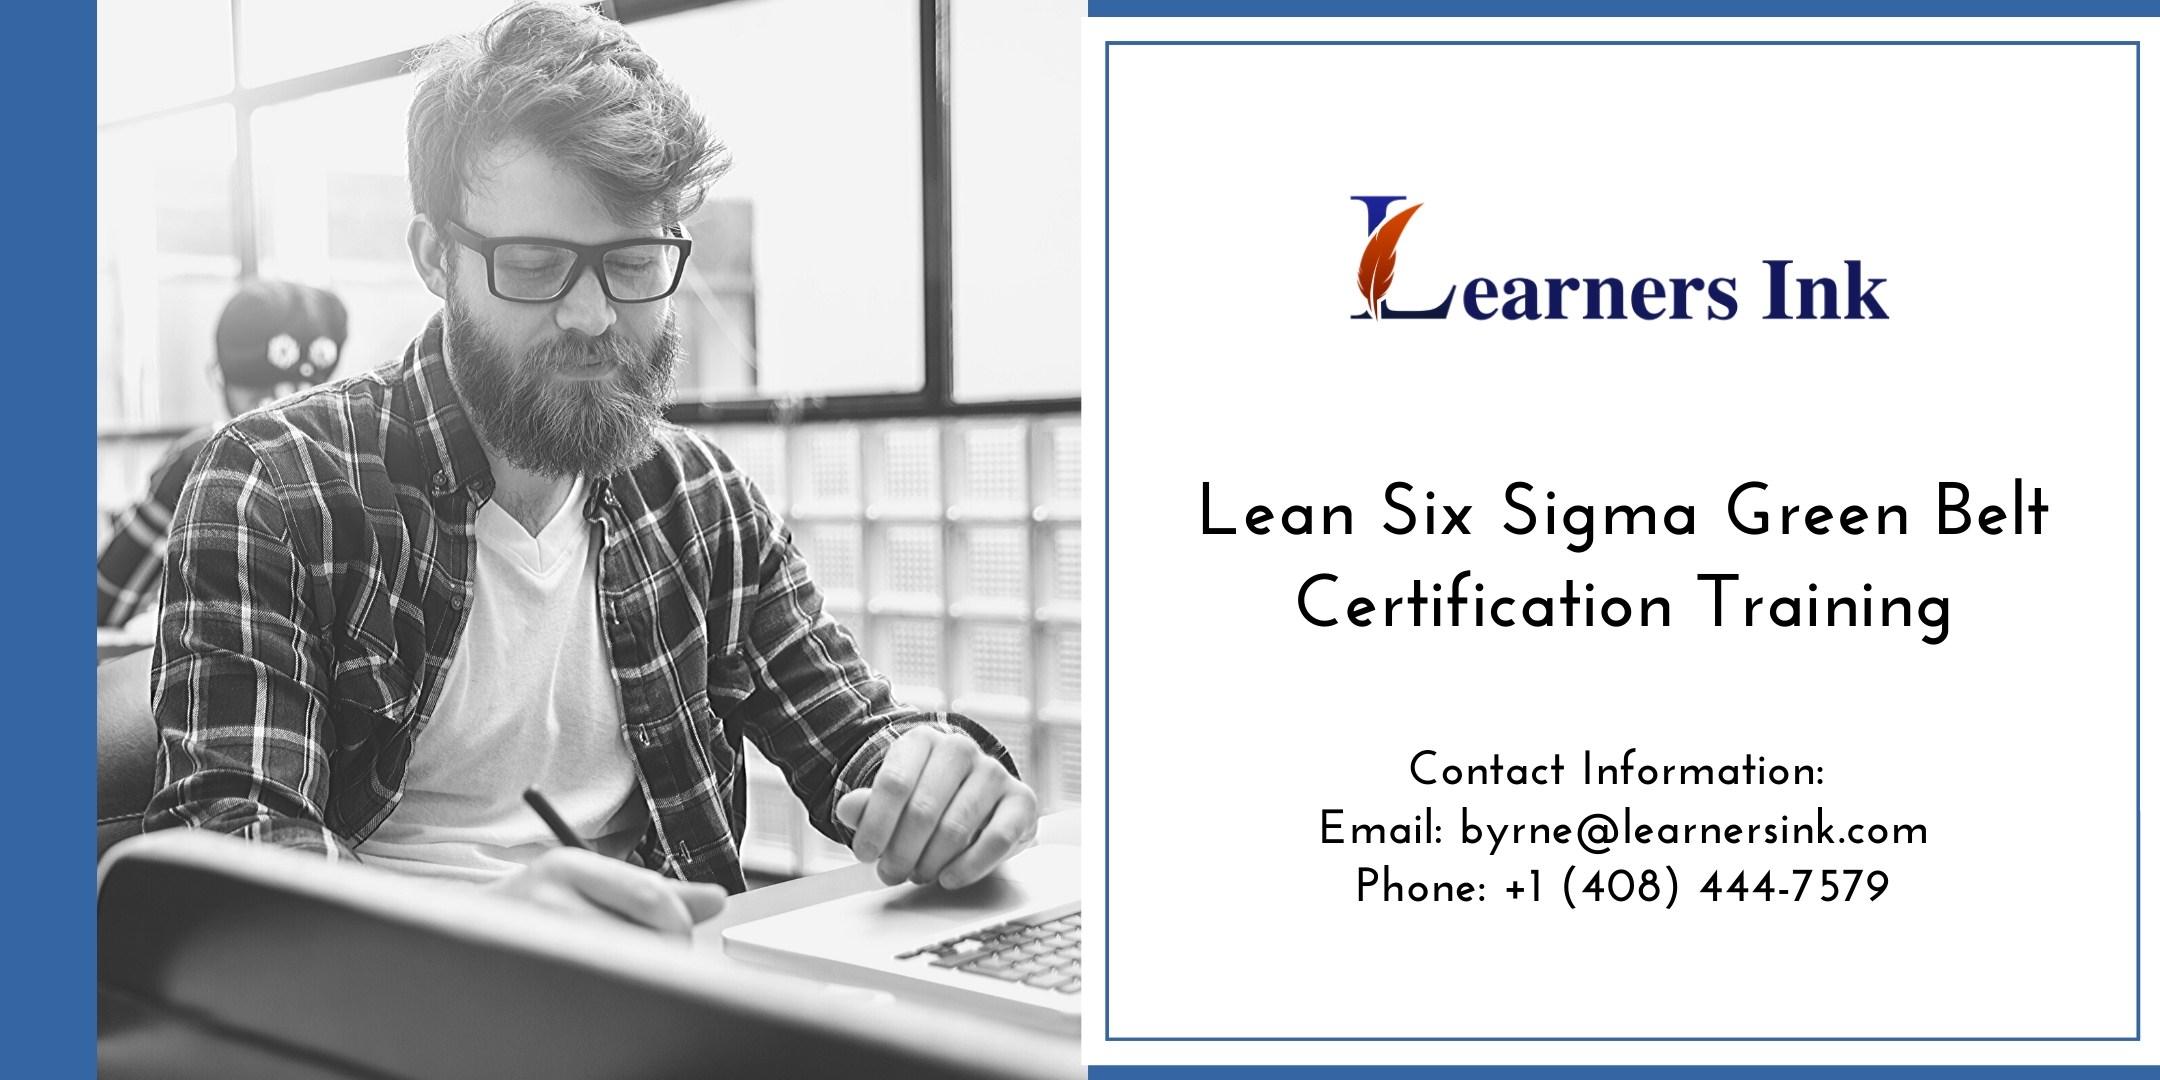 Lean Six Sigma Green Belt Certification Training Course (LSSGB) in Greensboro